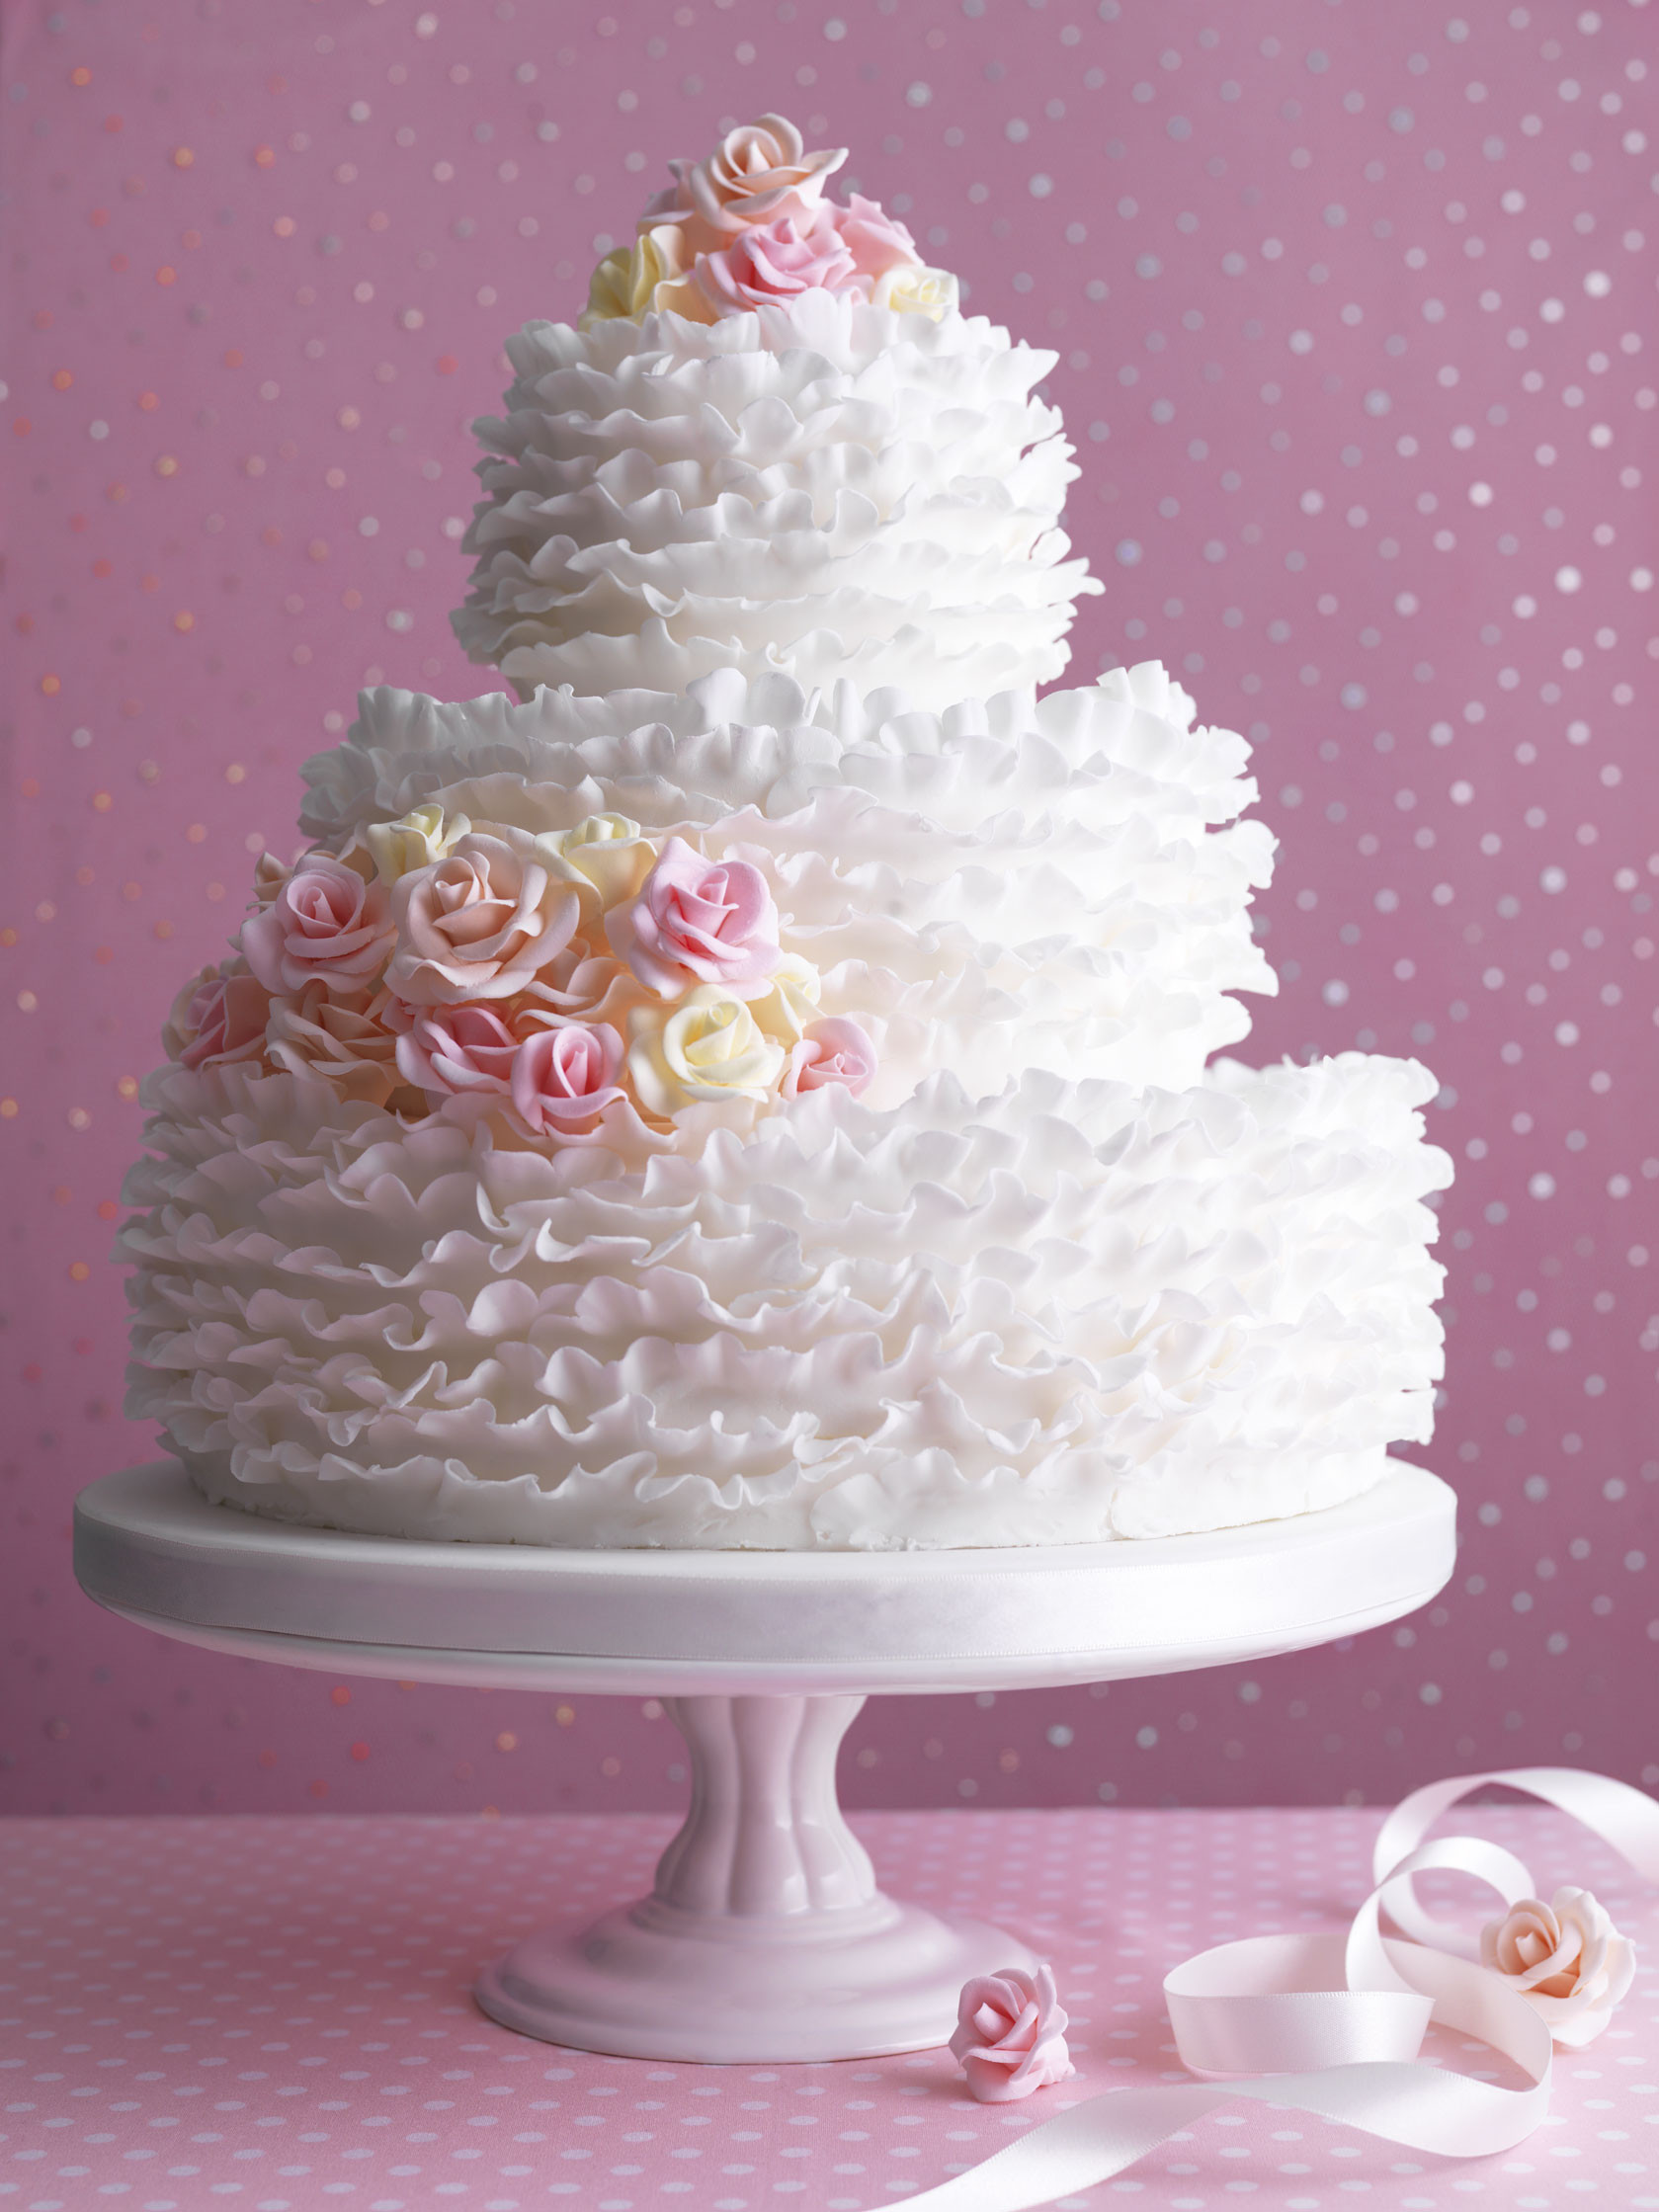 Making Wedding Cakes
 How to make a wedding cake